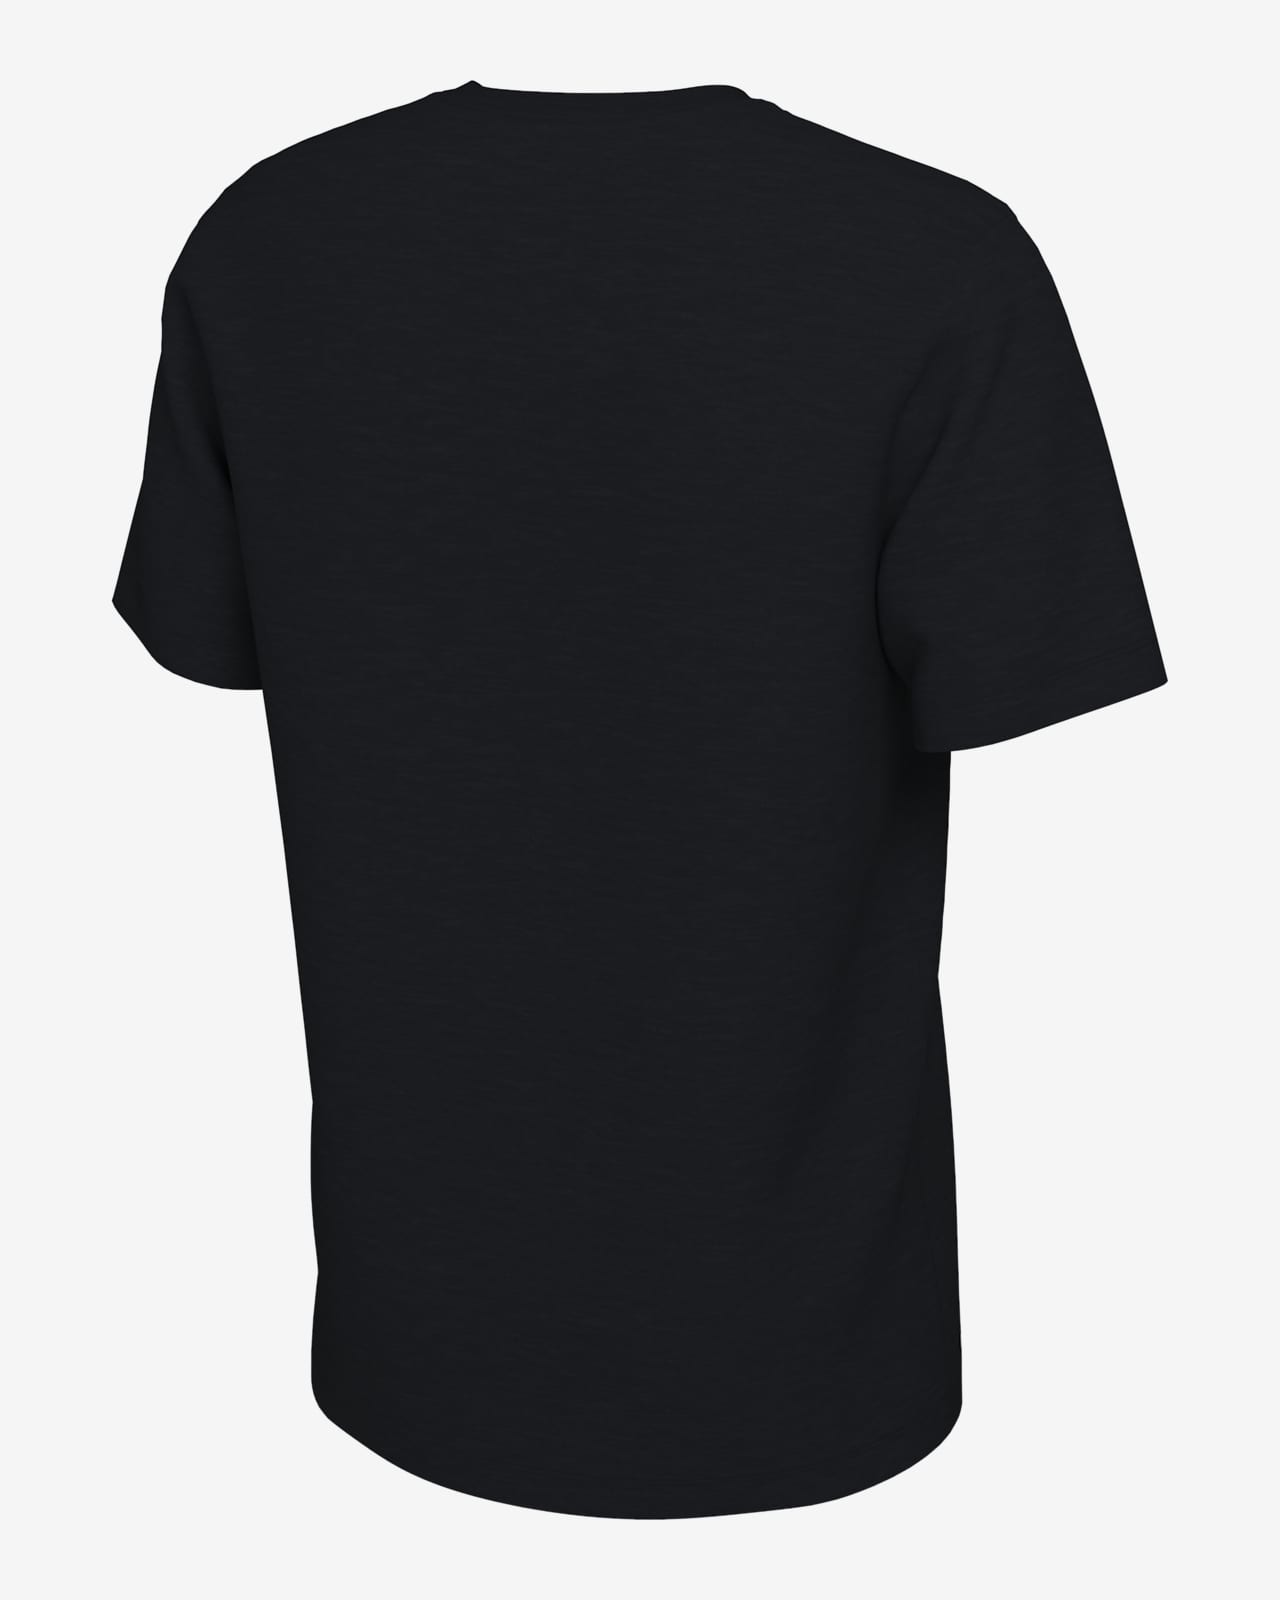 Denver Nuggets Nike City Edition Shooting Performance T-Shirt - Black/White